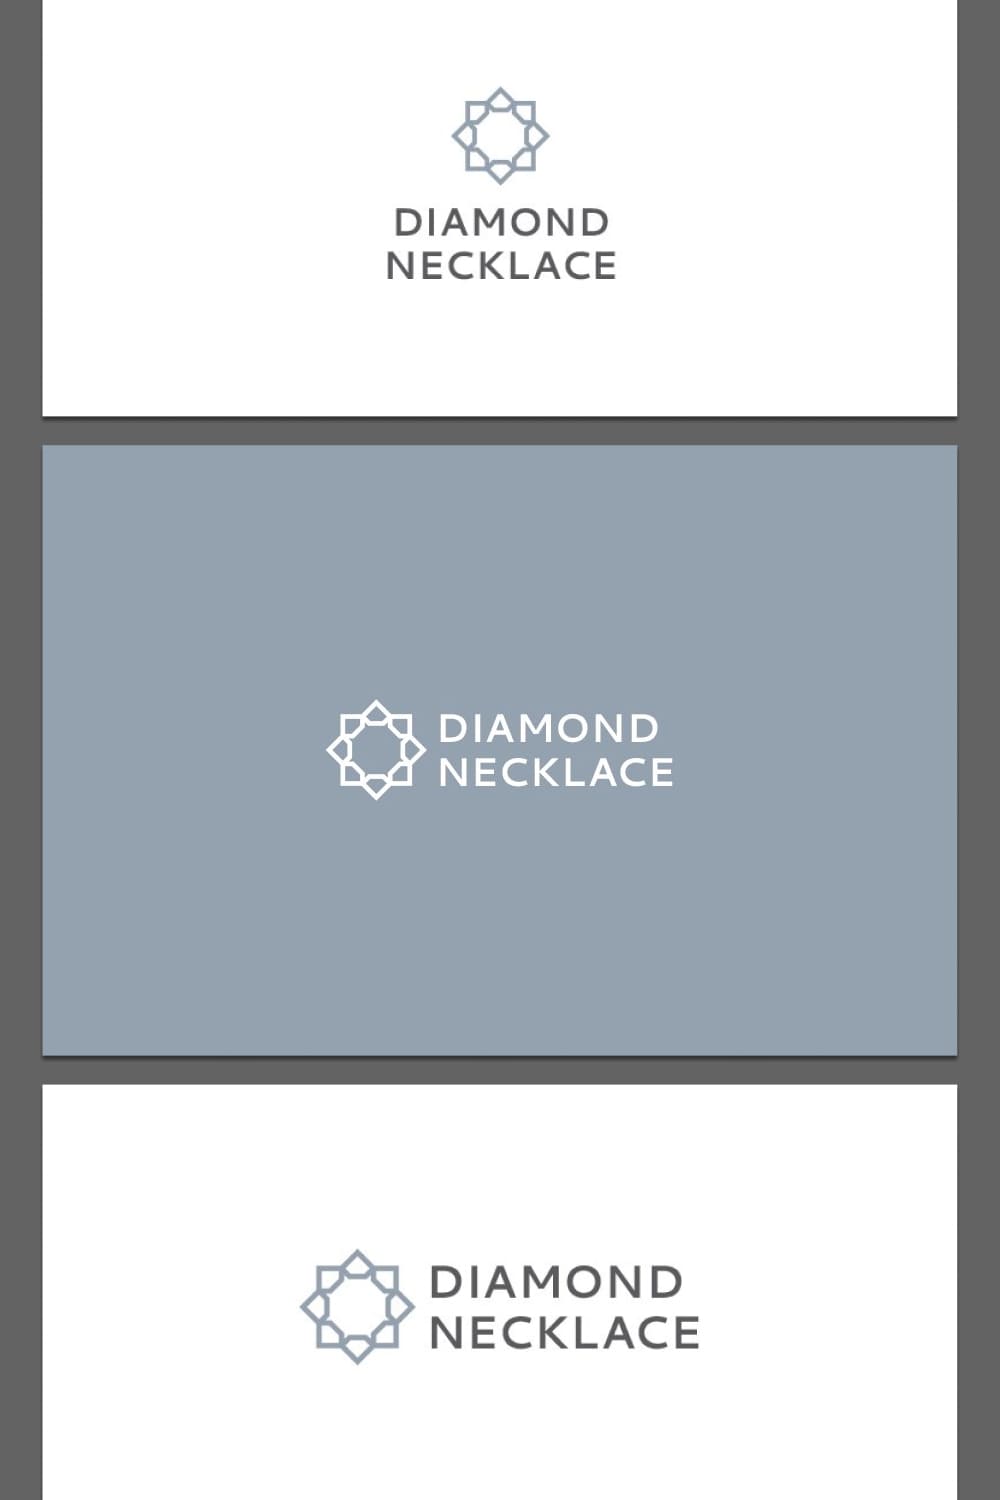 diamond necklace jewelry logo templates.